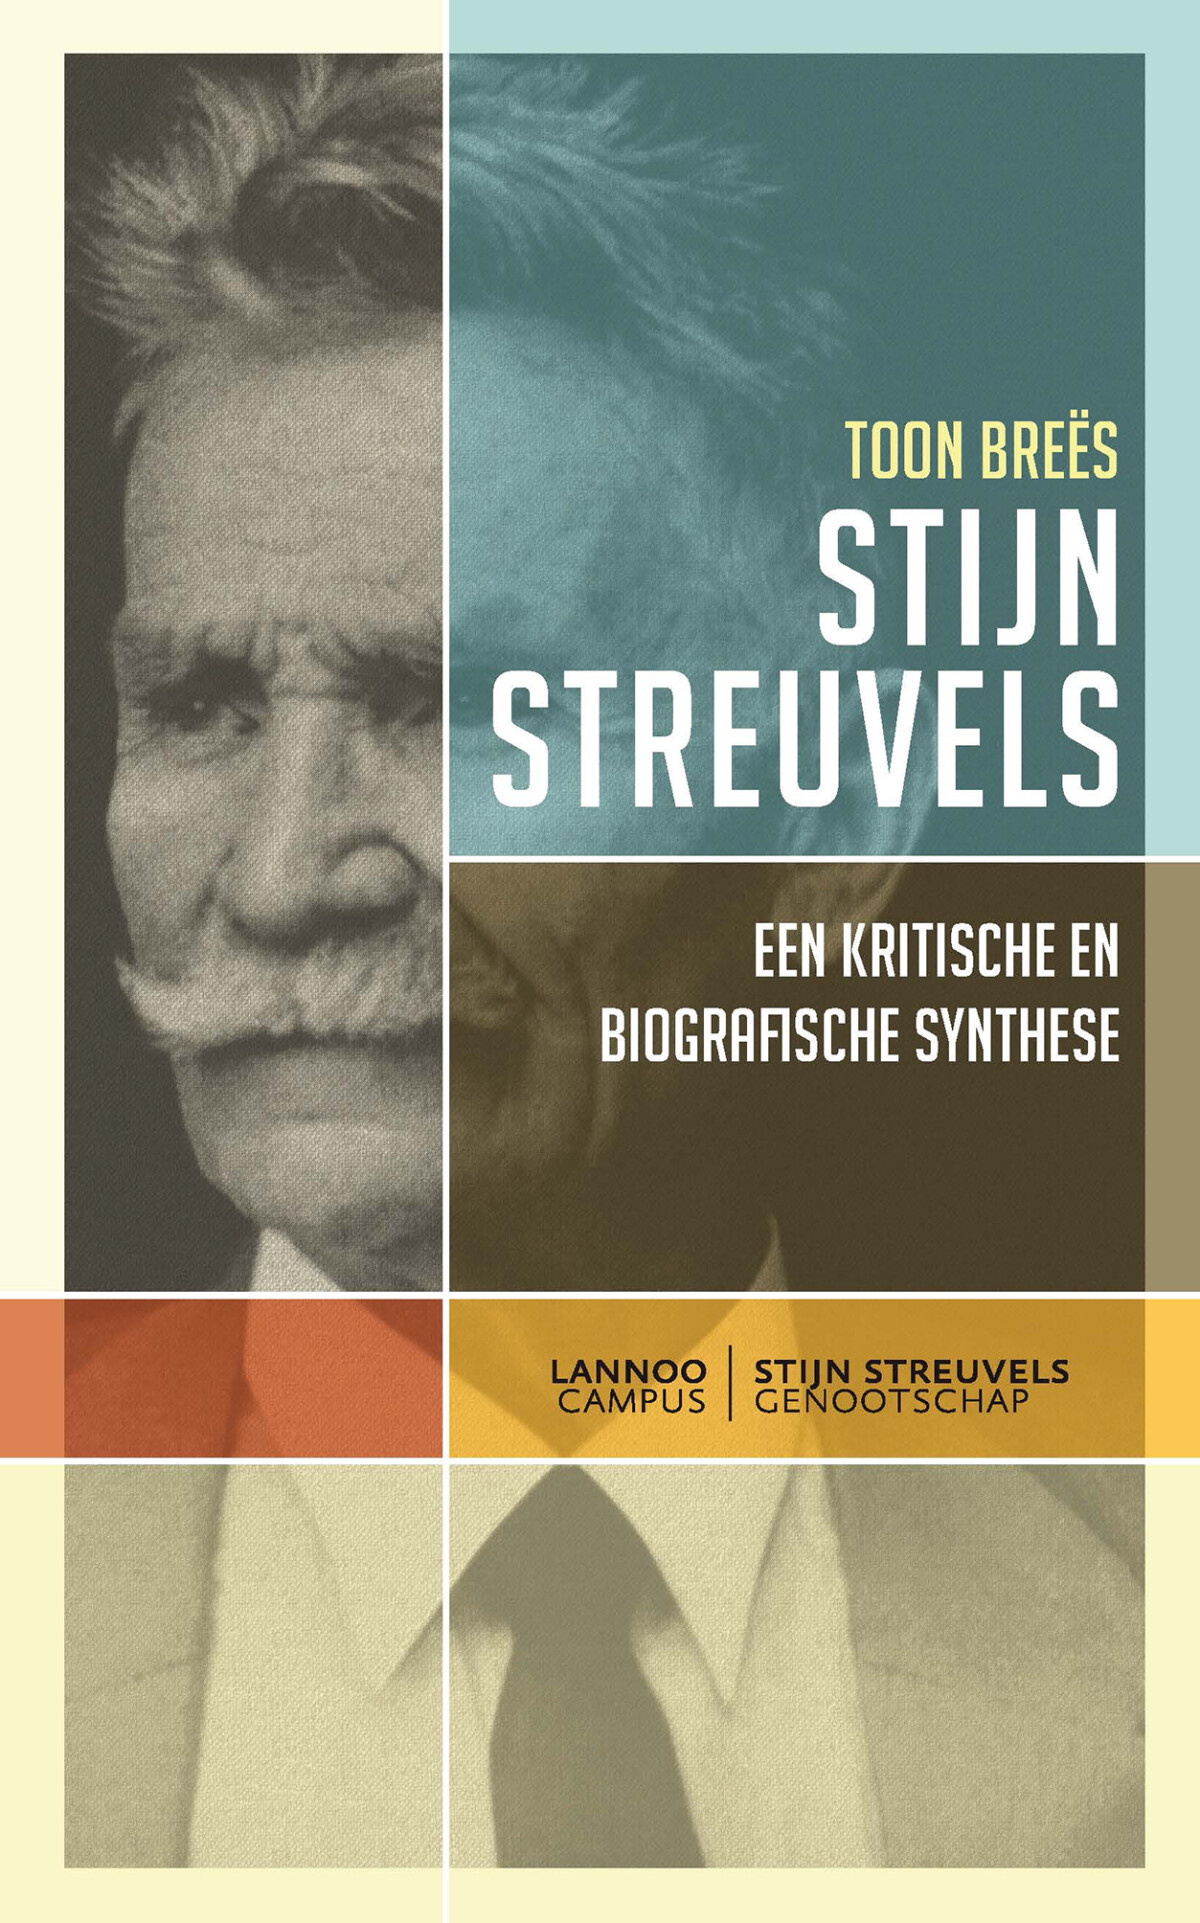 Stijn Streuvels